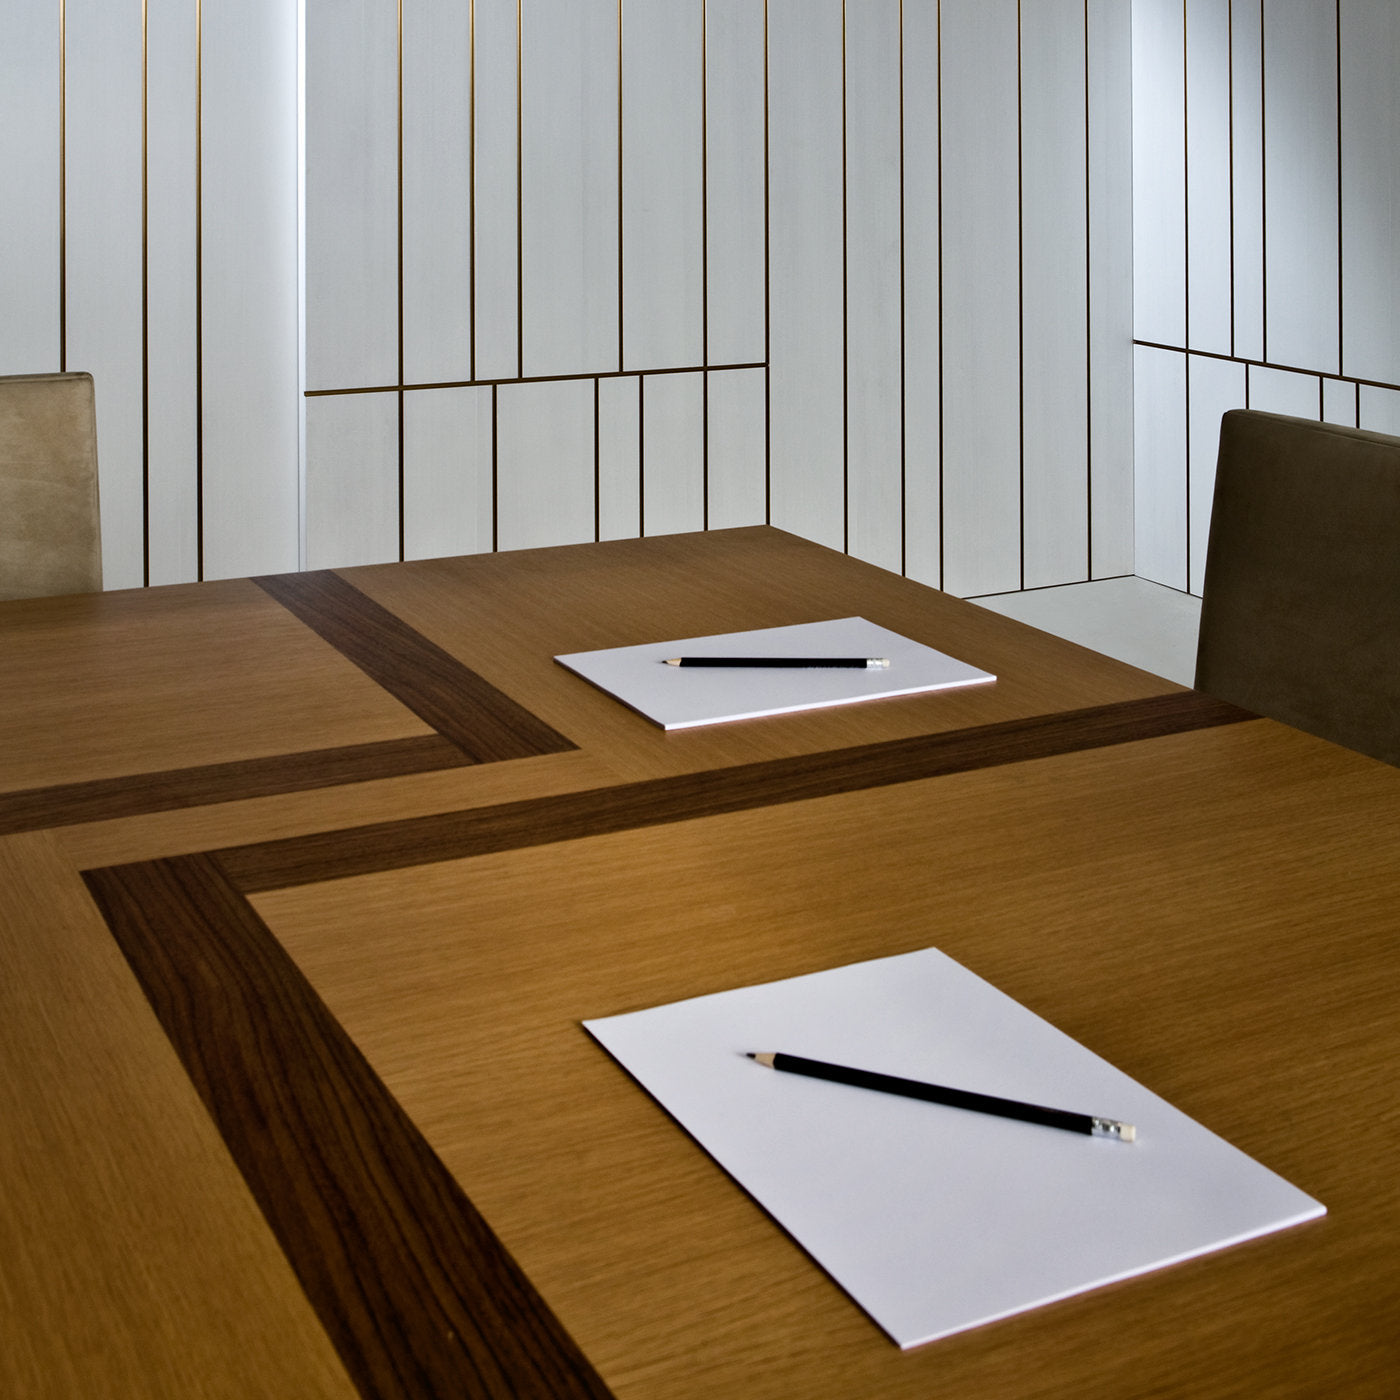 BD 07 Rectangular Table by Bartoli Design - Alternative view 4